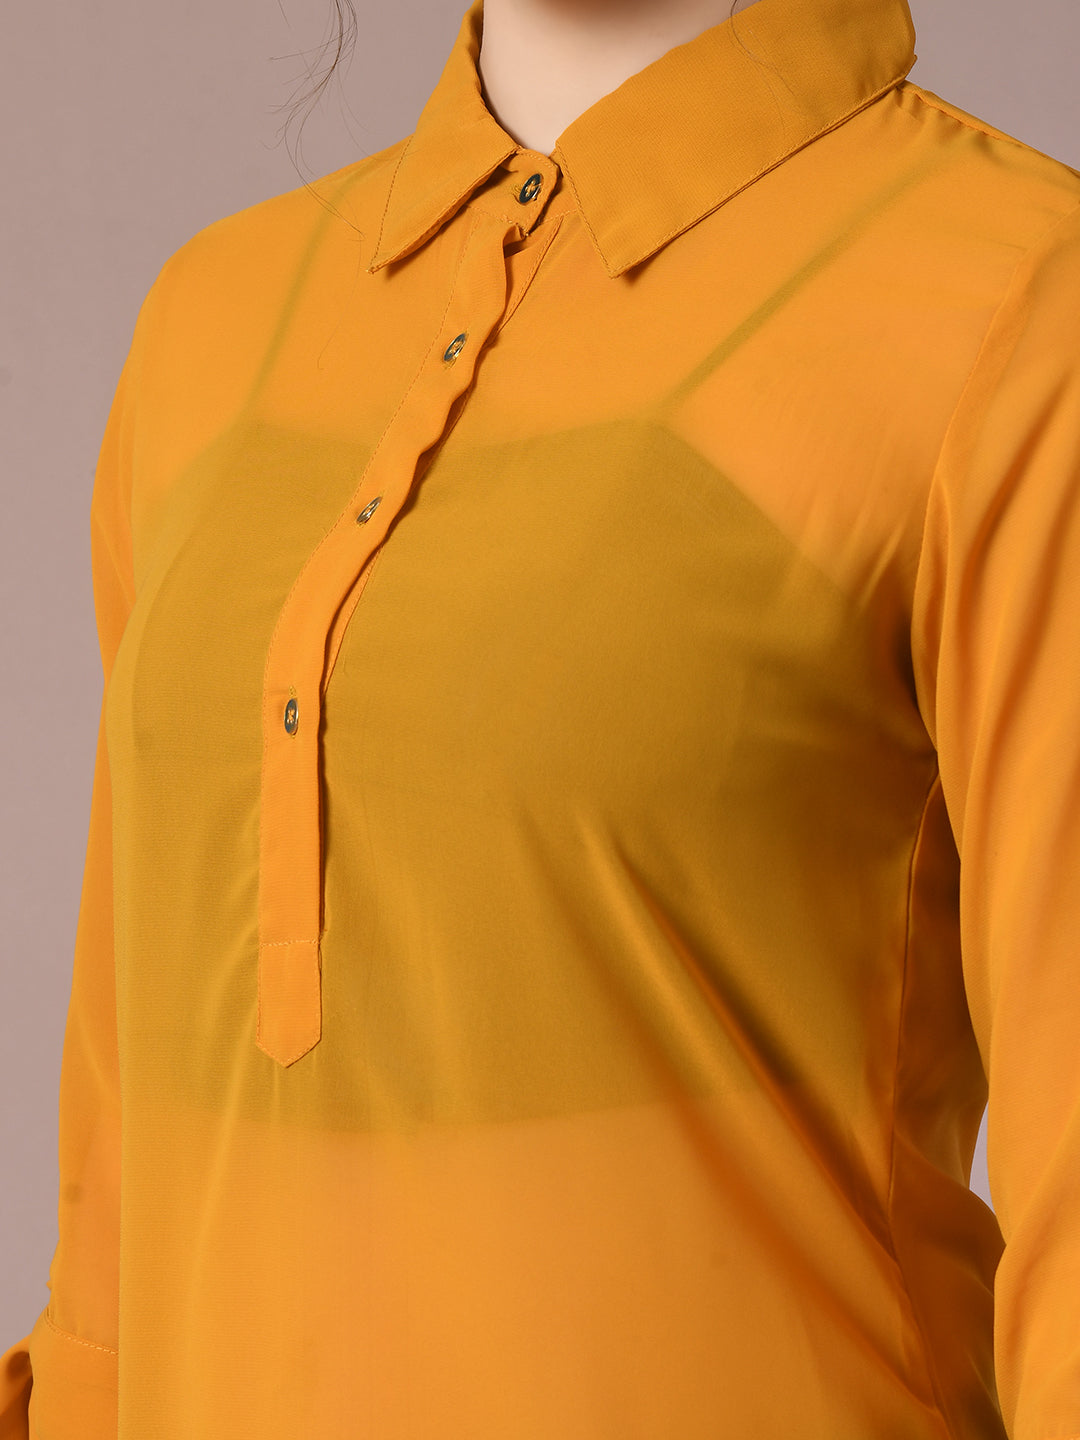 Women's  Yellow Solid Georgette Longline Party Sheer Tunic  - Myshka